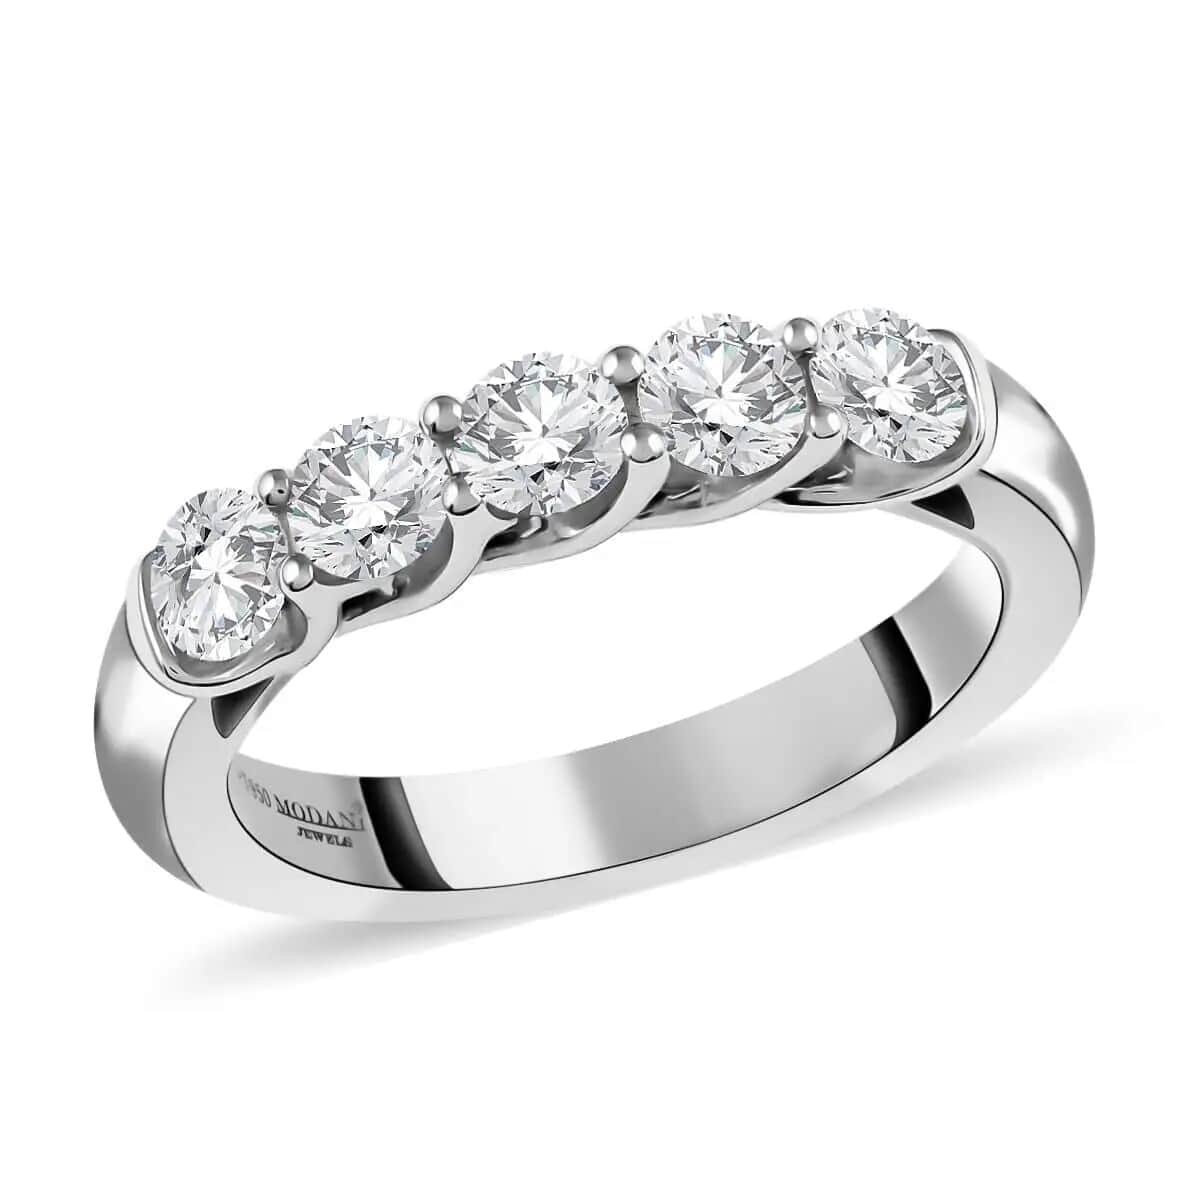 Modani 950 Platinum Natural Diamond G VVS2 Ring (Size 10.0) 8 Grams 1.00 ctw image number 0